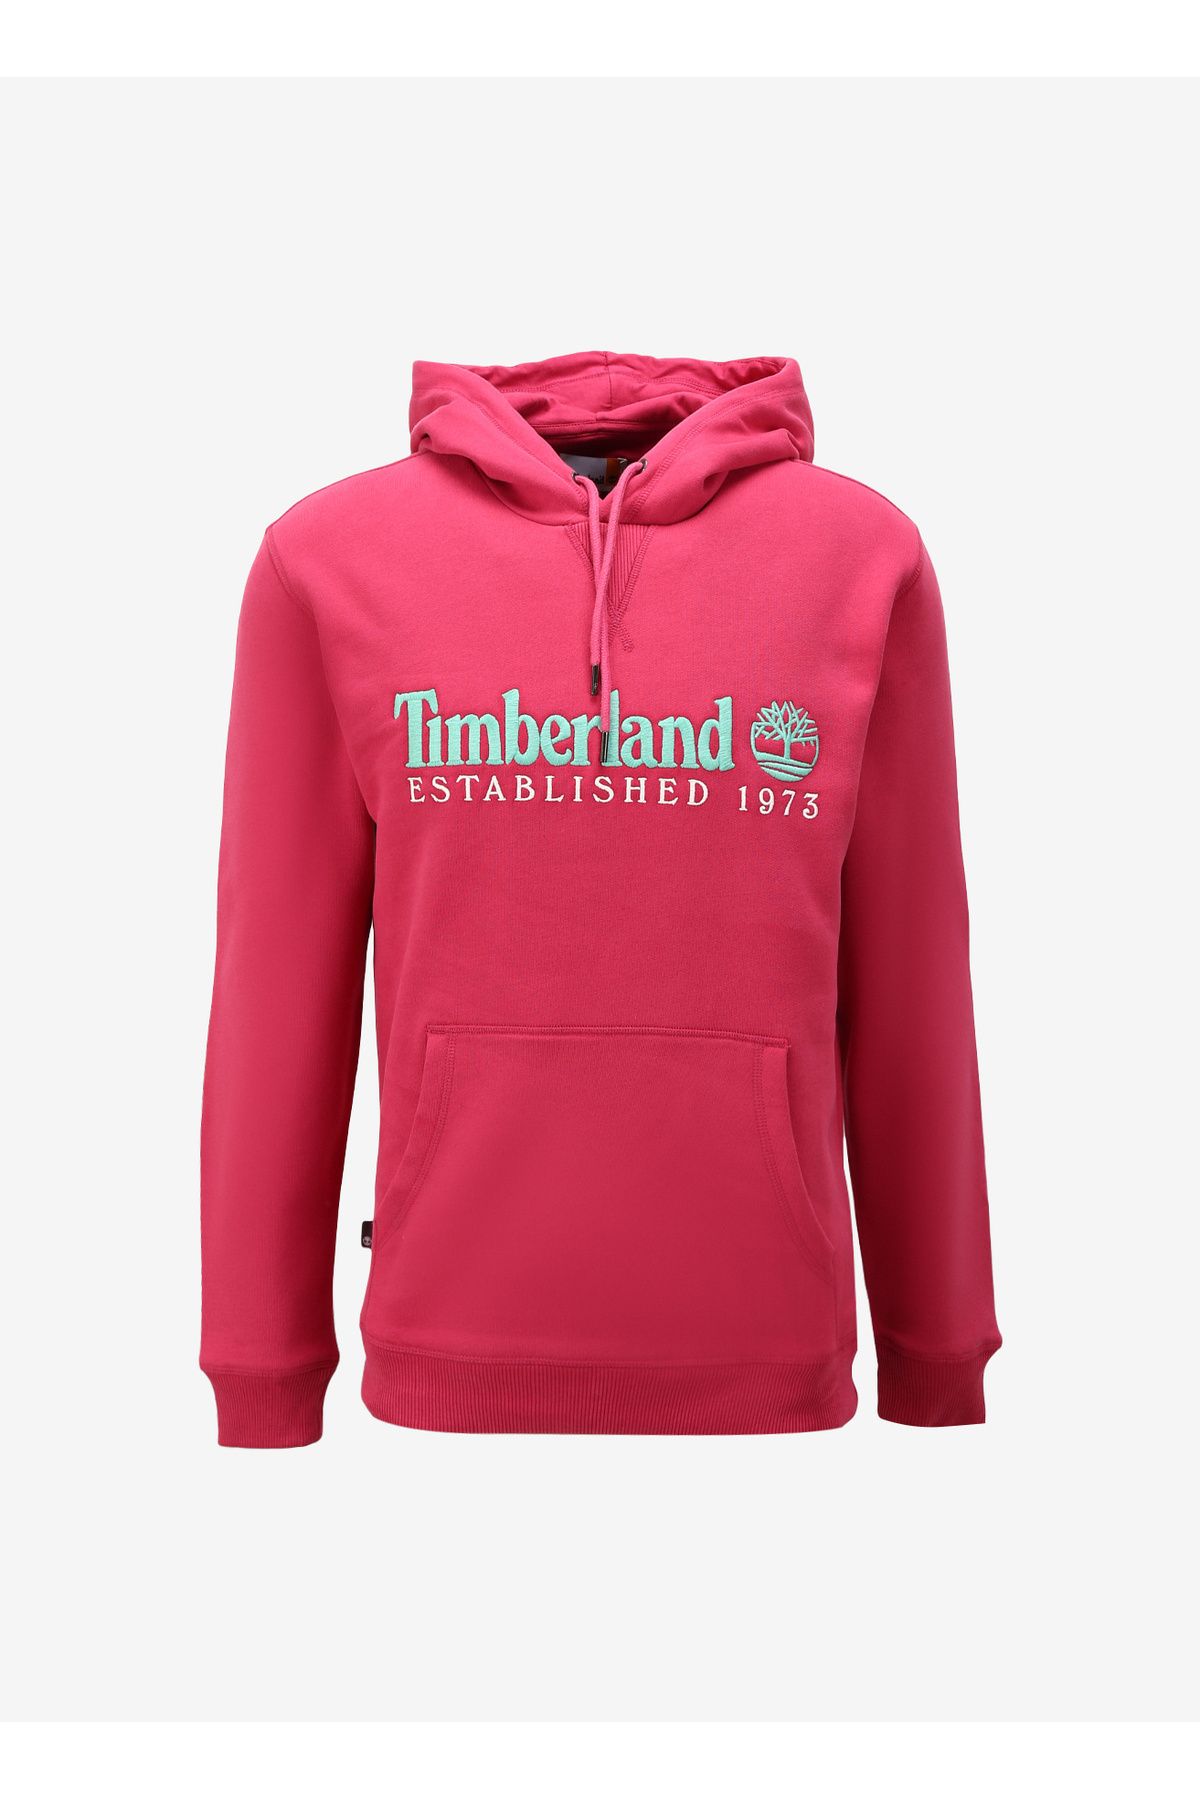 Timberland Mürdüm Erkek Baskılı Sweatshirt TB0A6S5WED21_LS 50th Anniversary Es